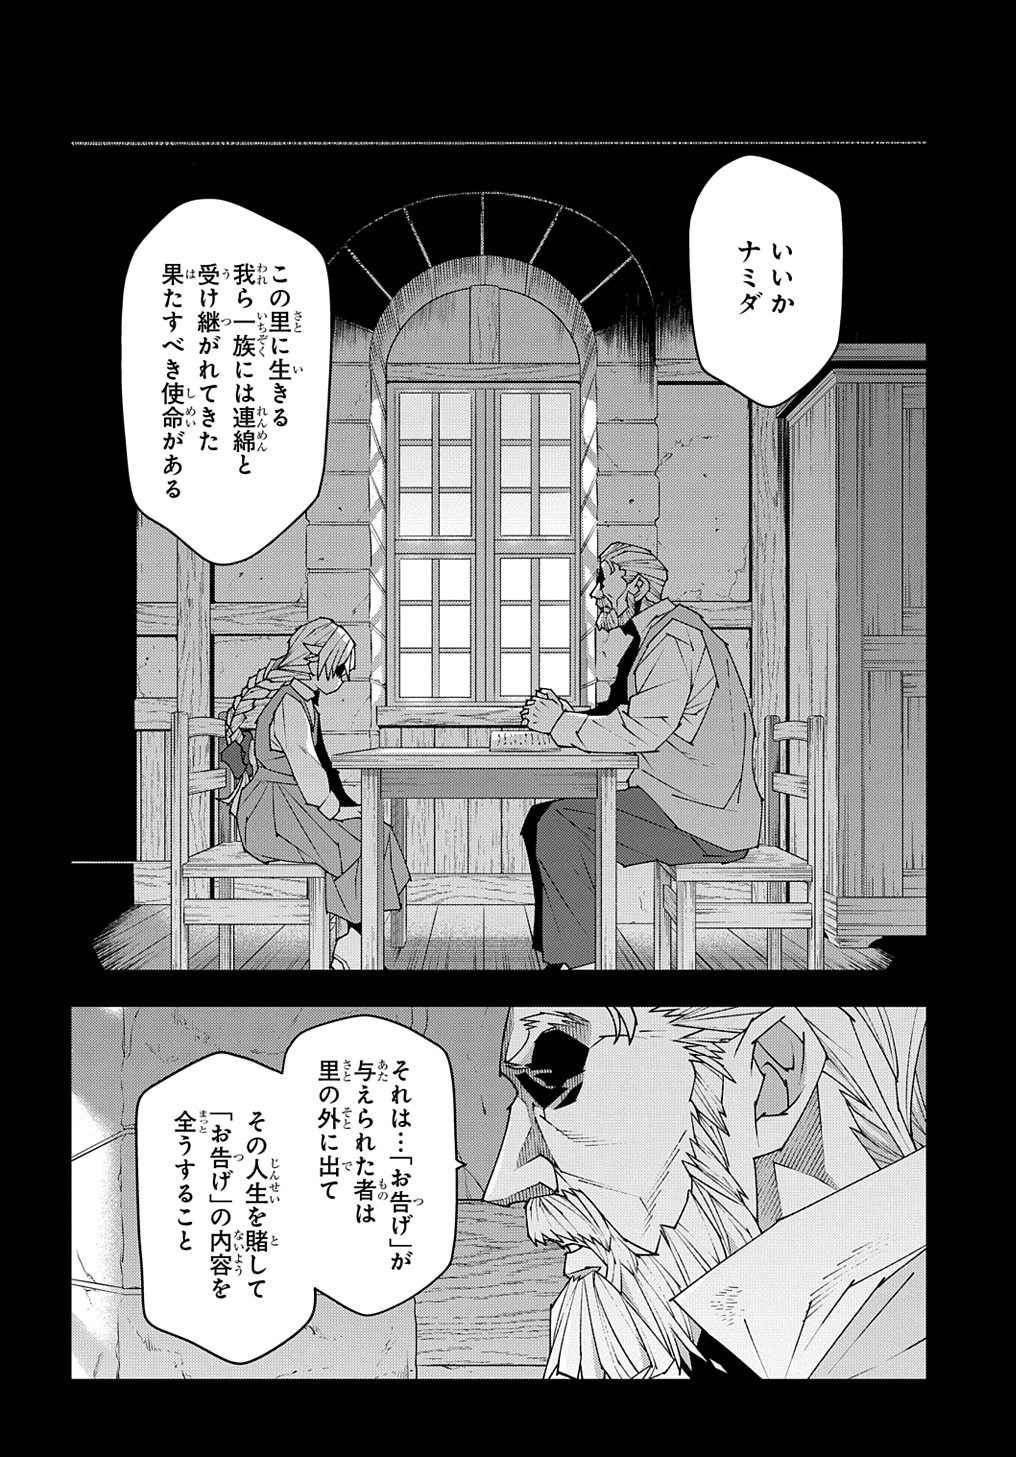 Meikyuu Black Company - Chapter 50 - Page 2